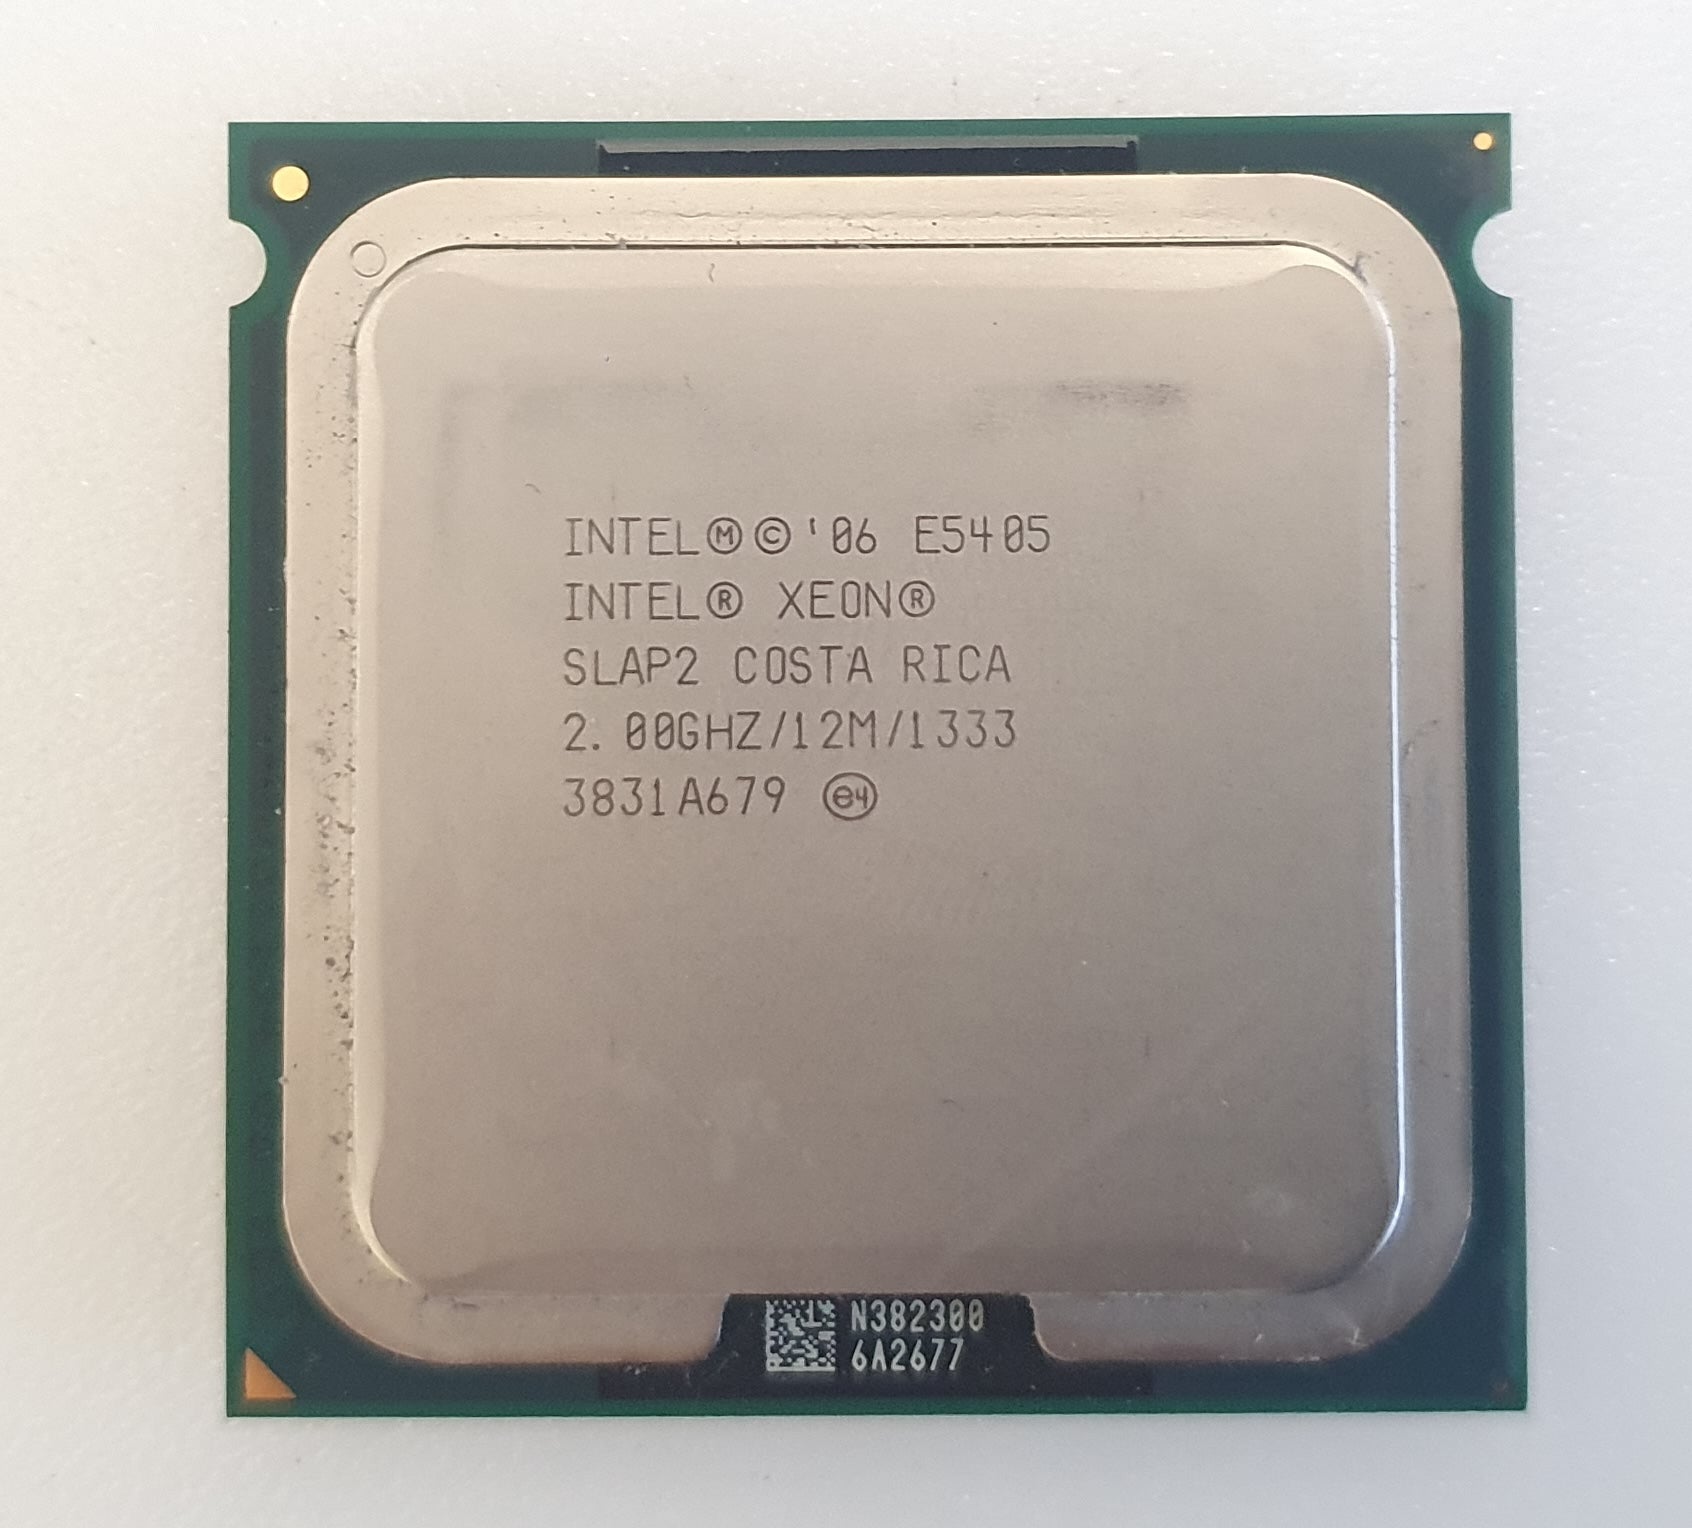 HP Proliant DL380 G5 - Intel Xeon 2GHz SLAP2 E5405
